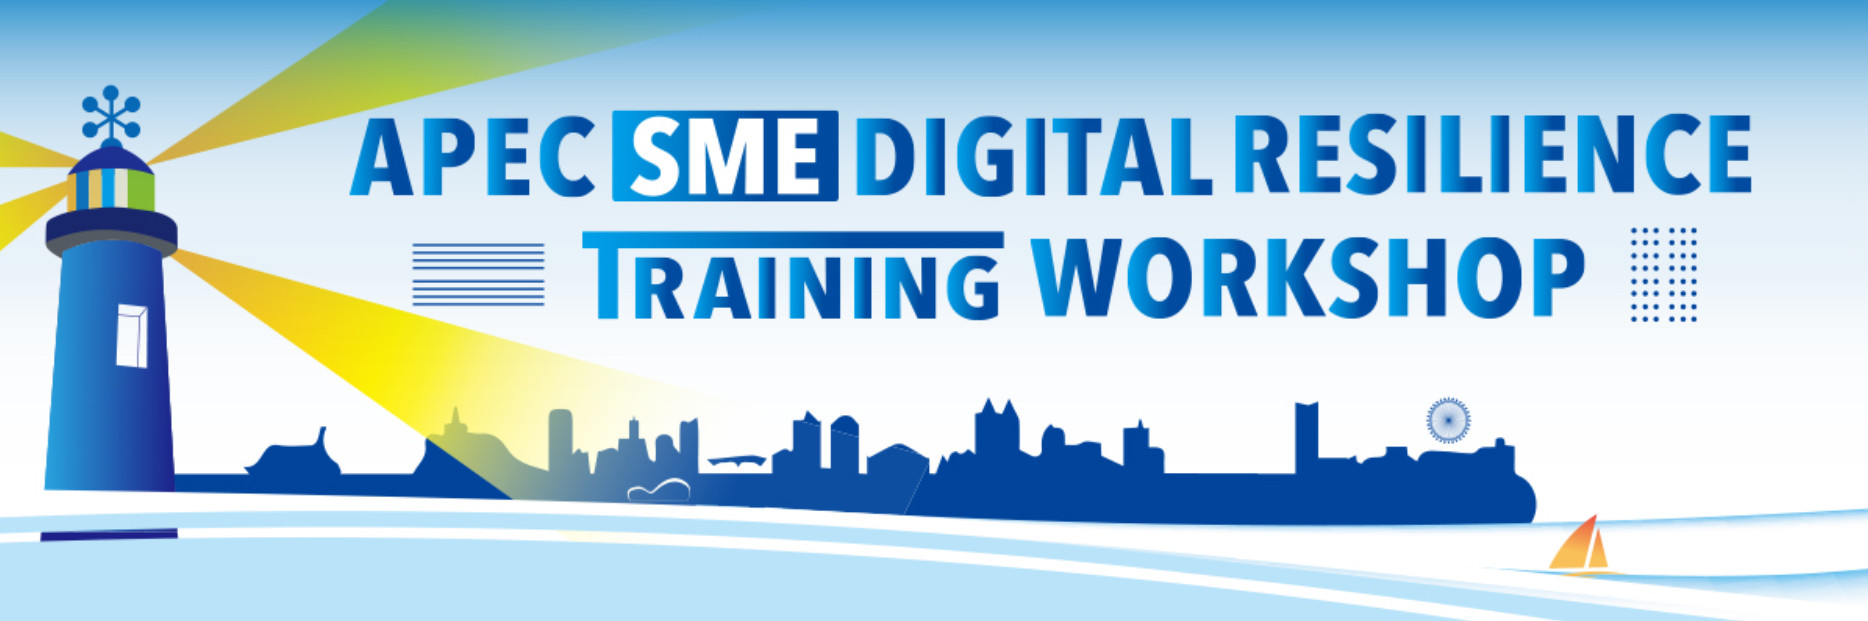 APEC SME Digital Resilience Training Workshop - KAOHSIUNG 2017